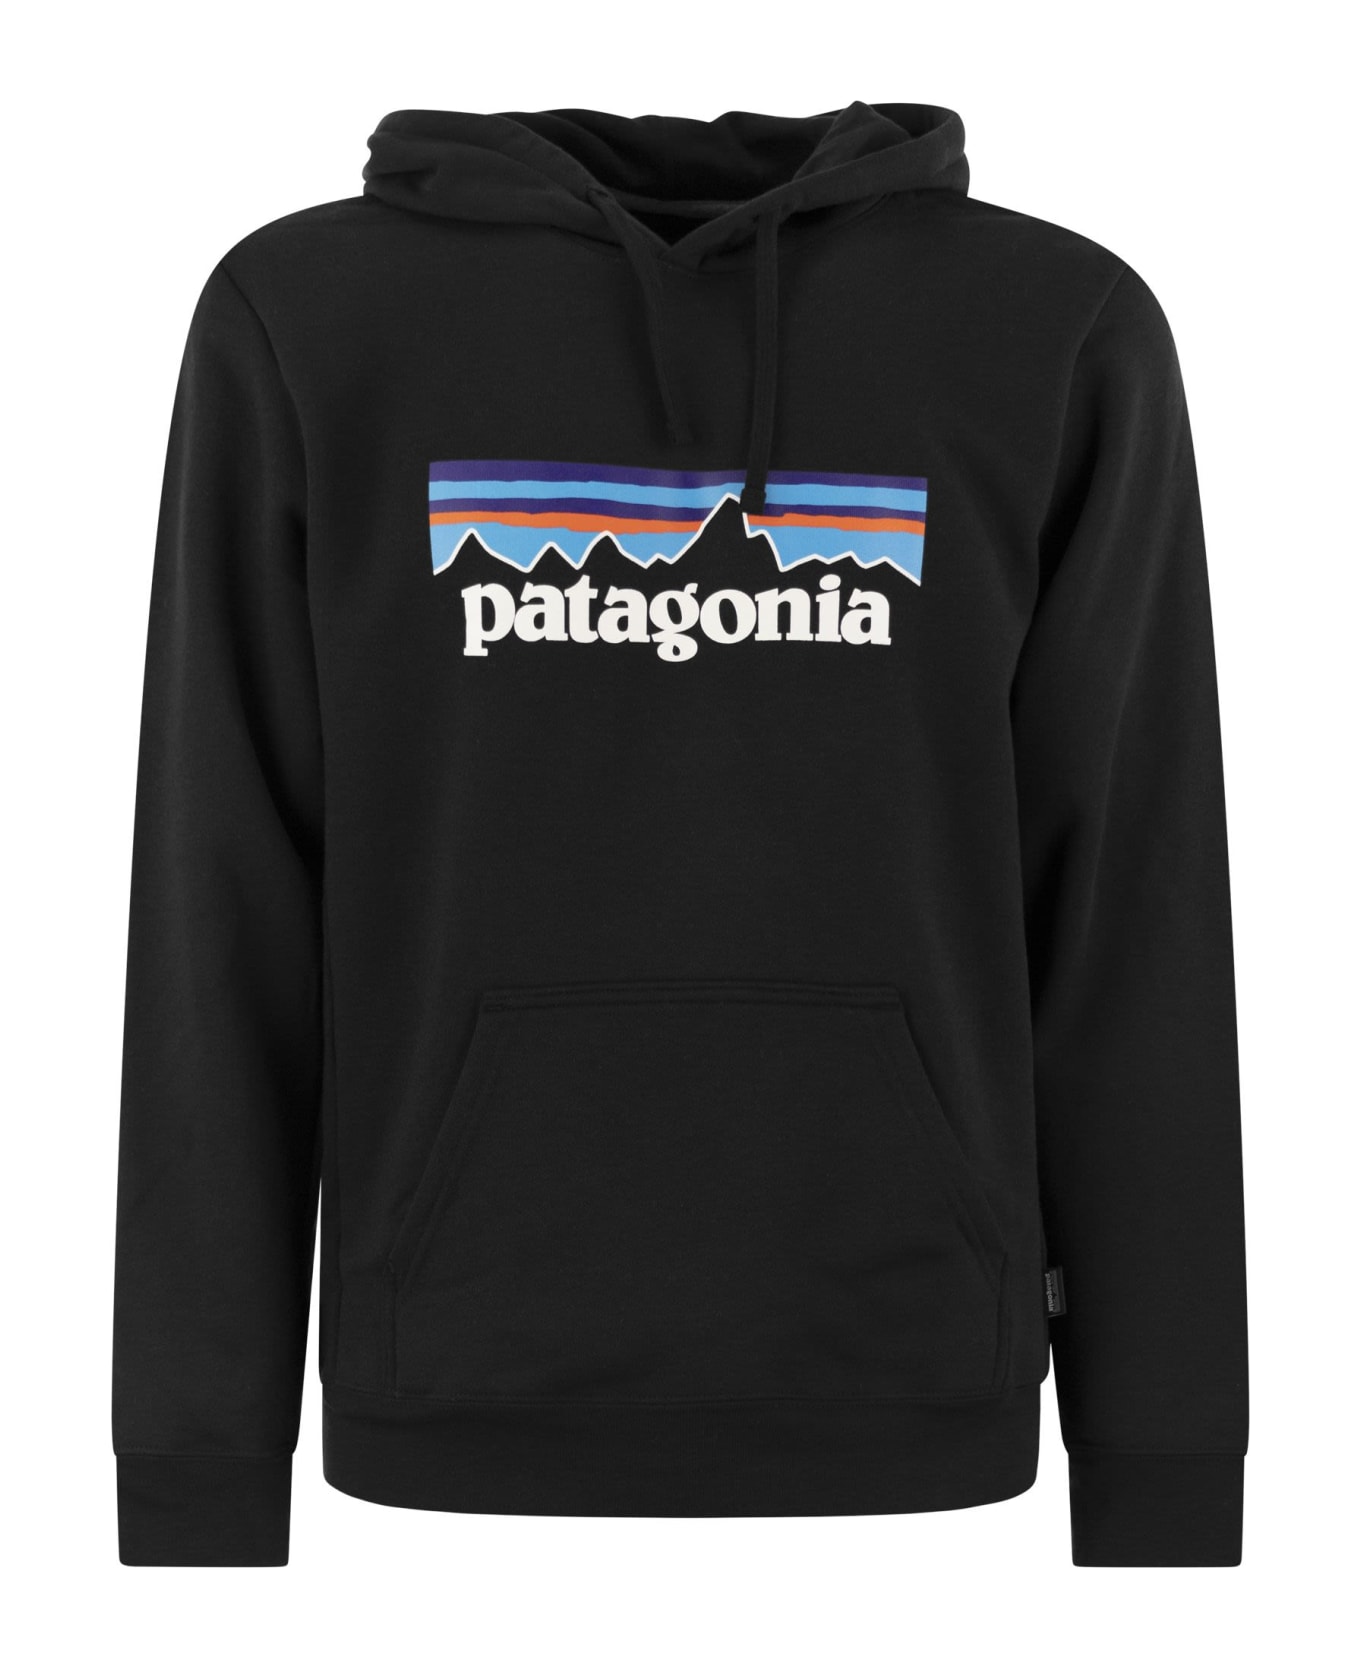 Patagonia Cotton Blend Hoodie - Black